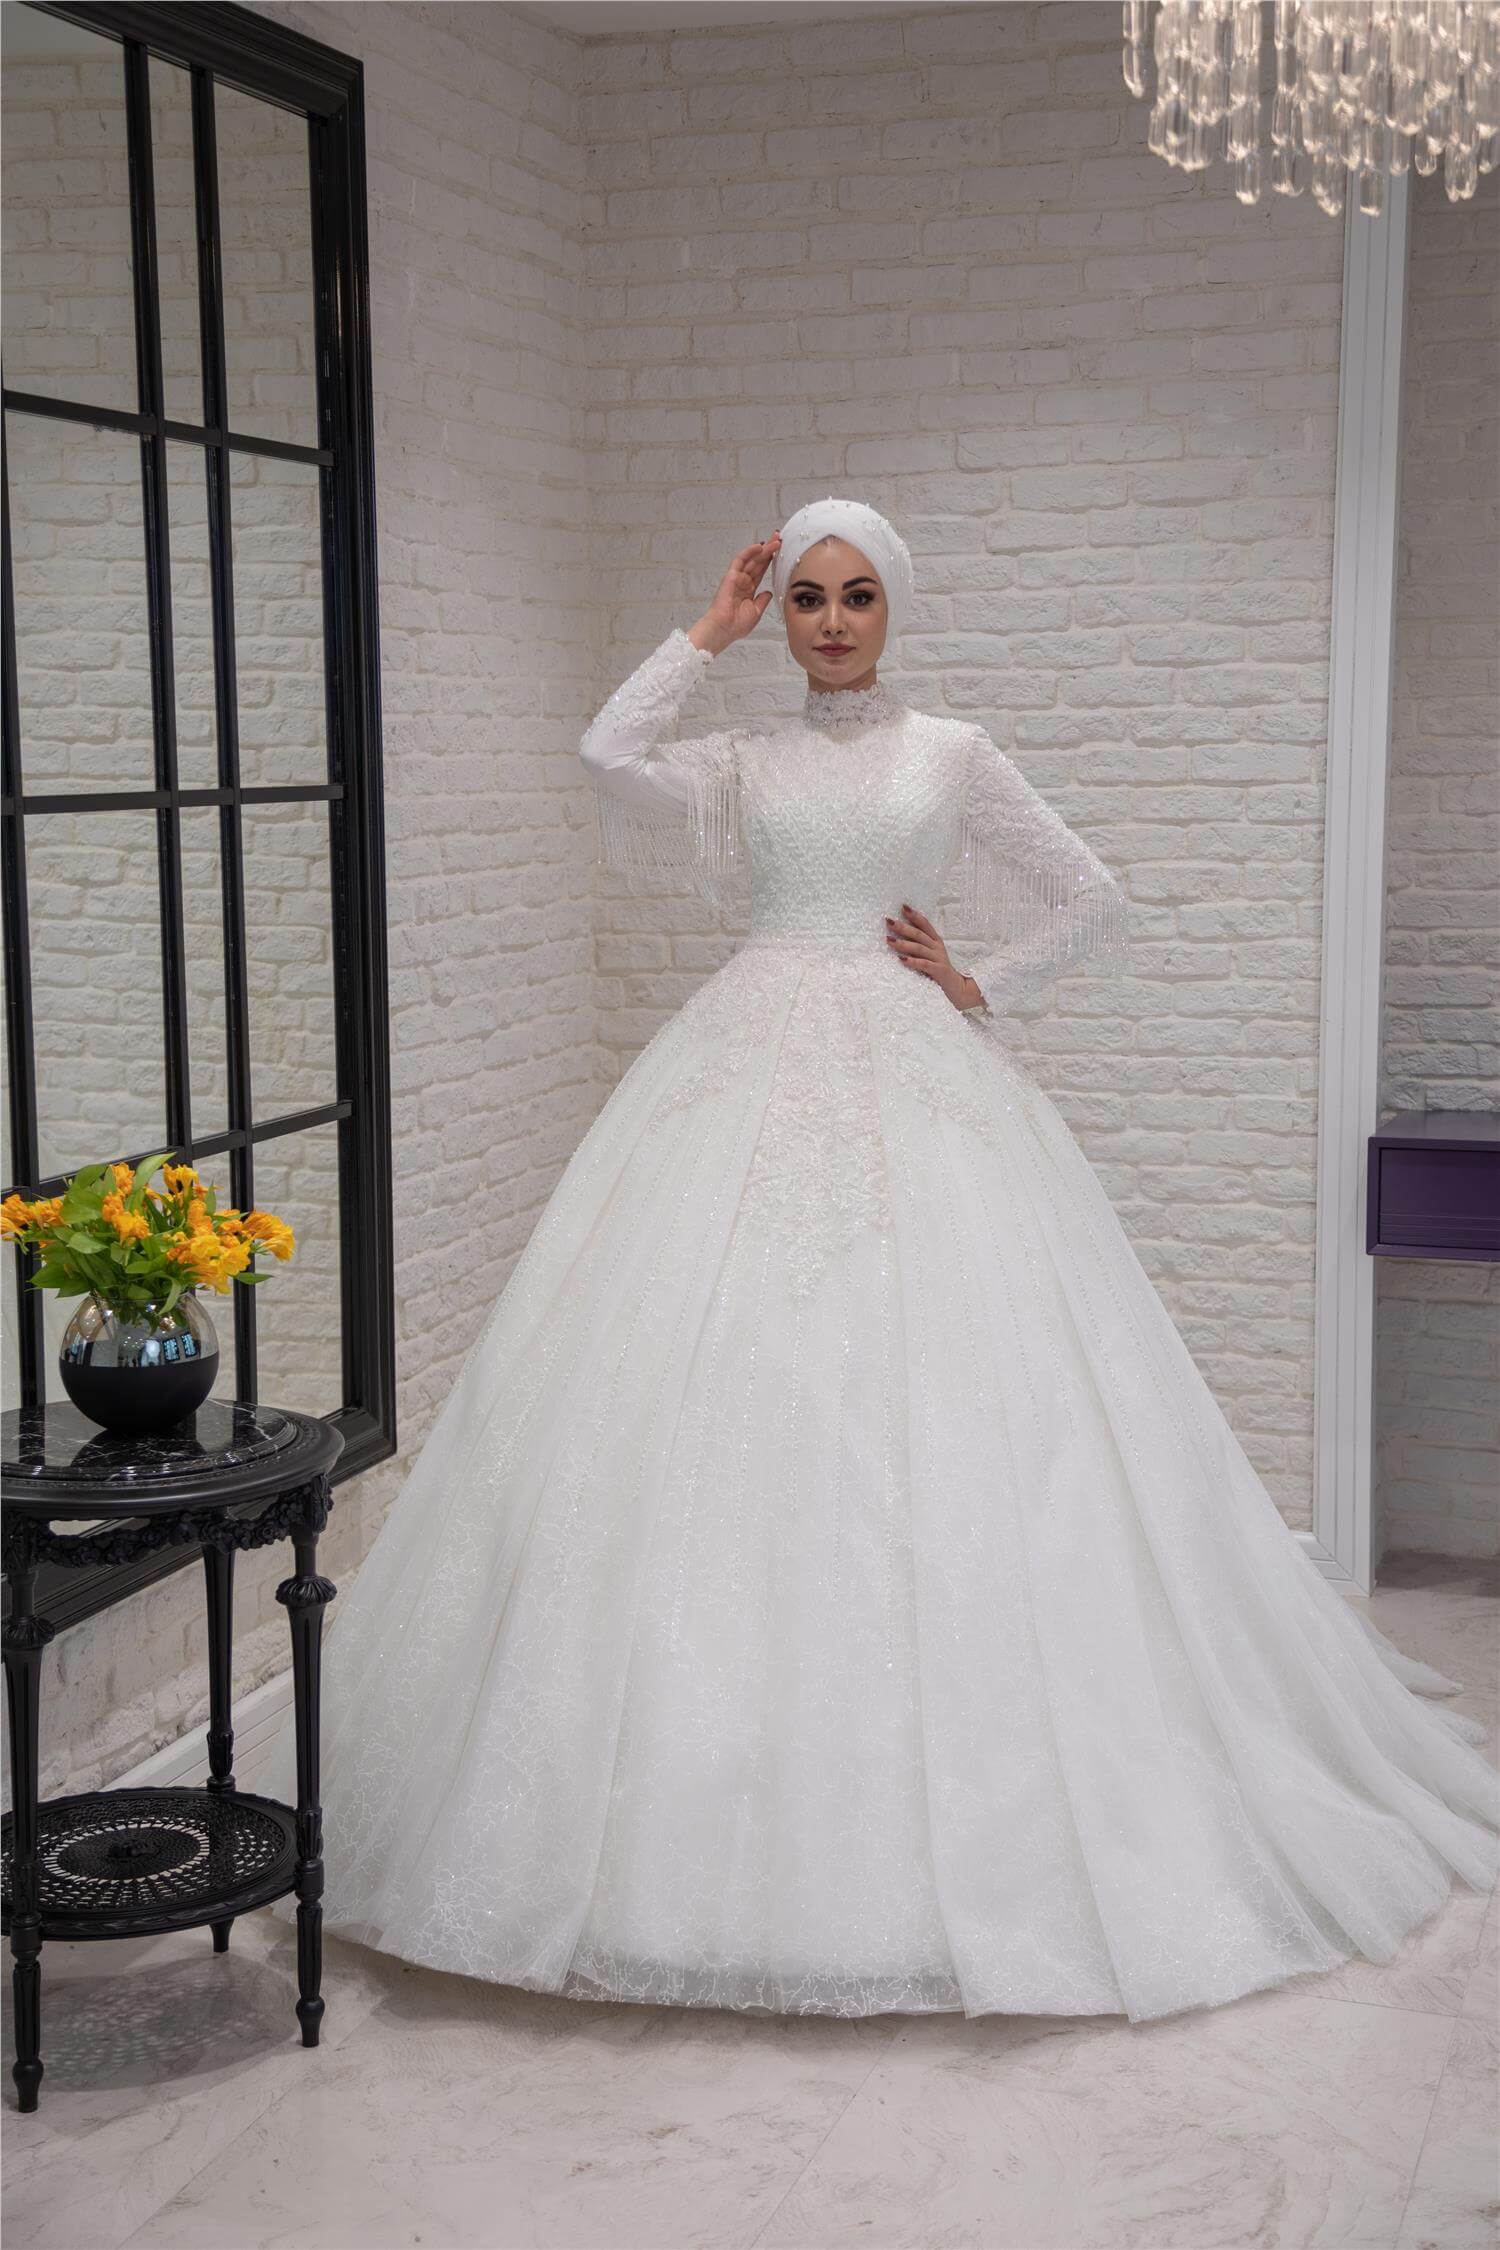 Judge Collar Helen Hijab Wedding Dress with Tulle Skirt